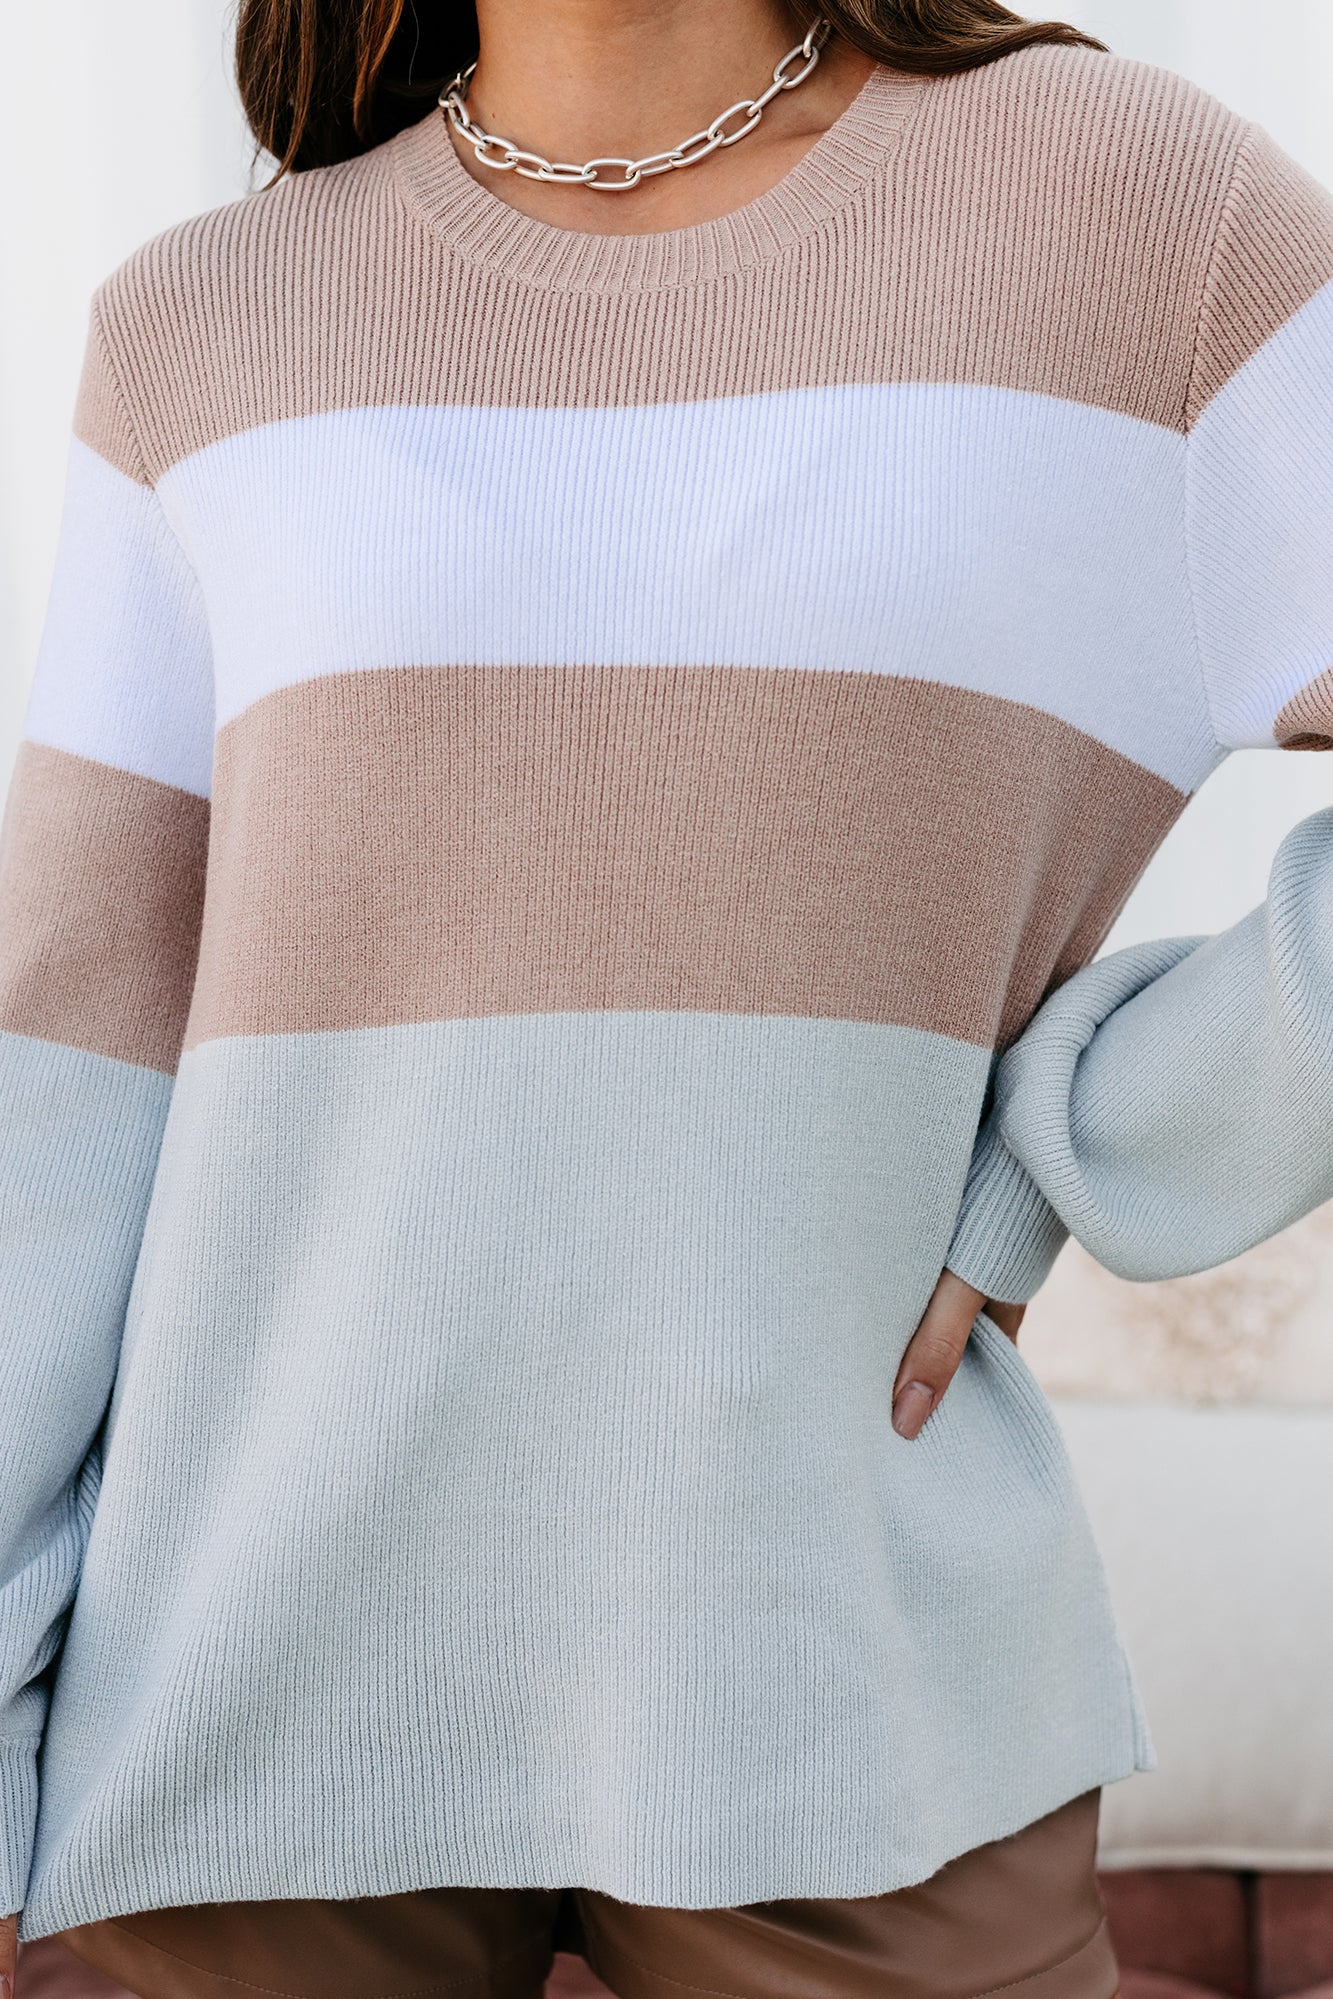 Keep It Current Color Block Sweater (Mocha/White/Grey) - NanaMacs